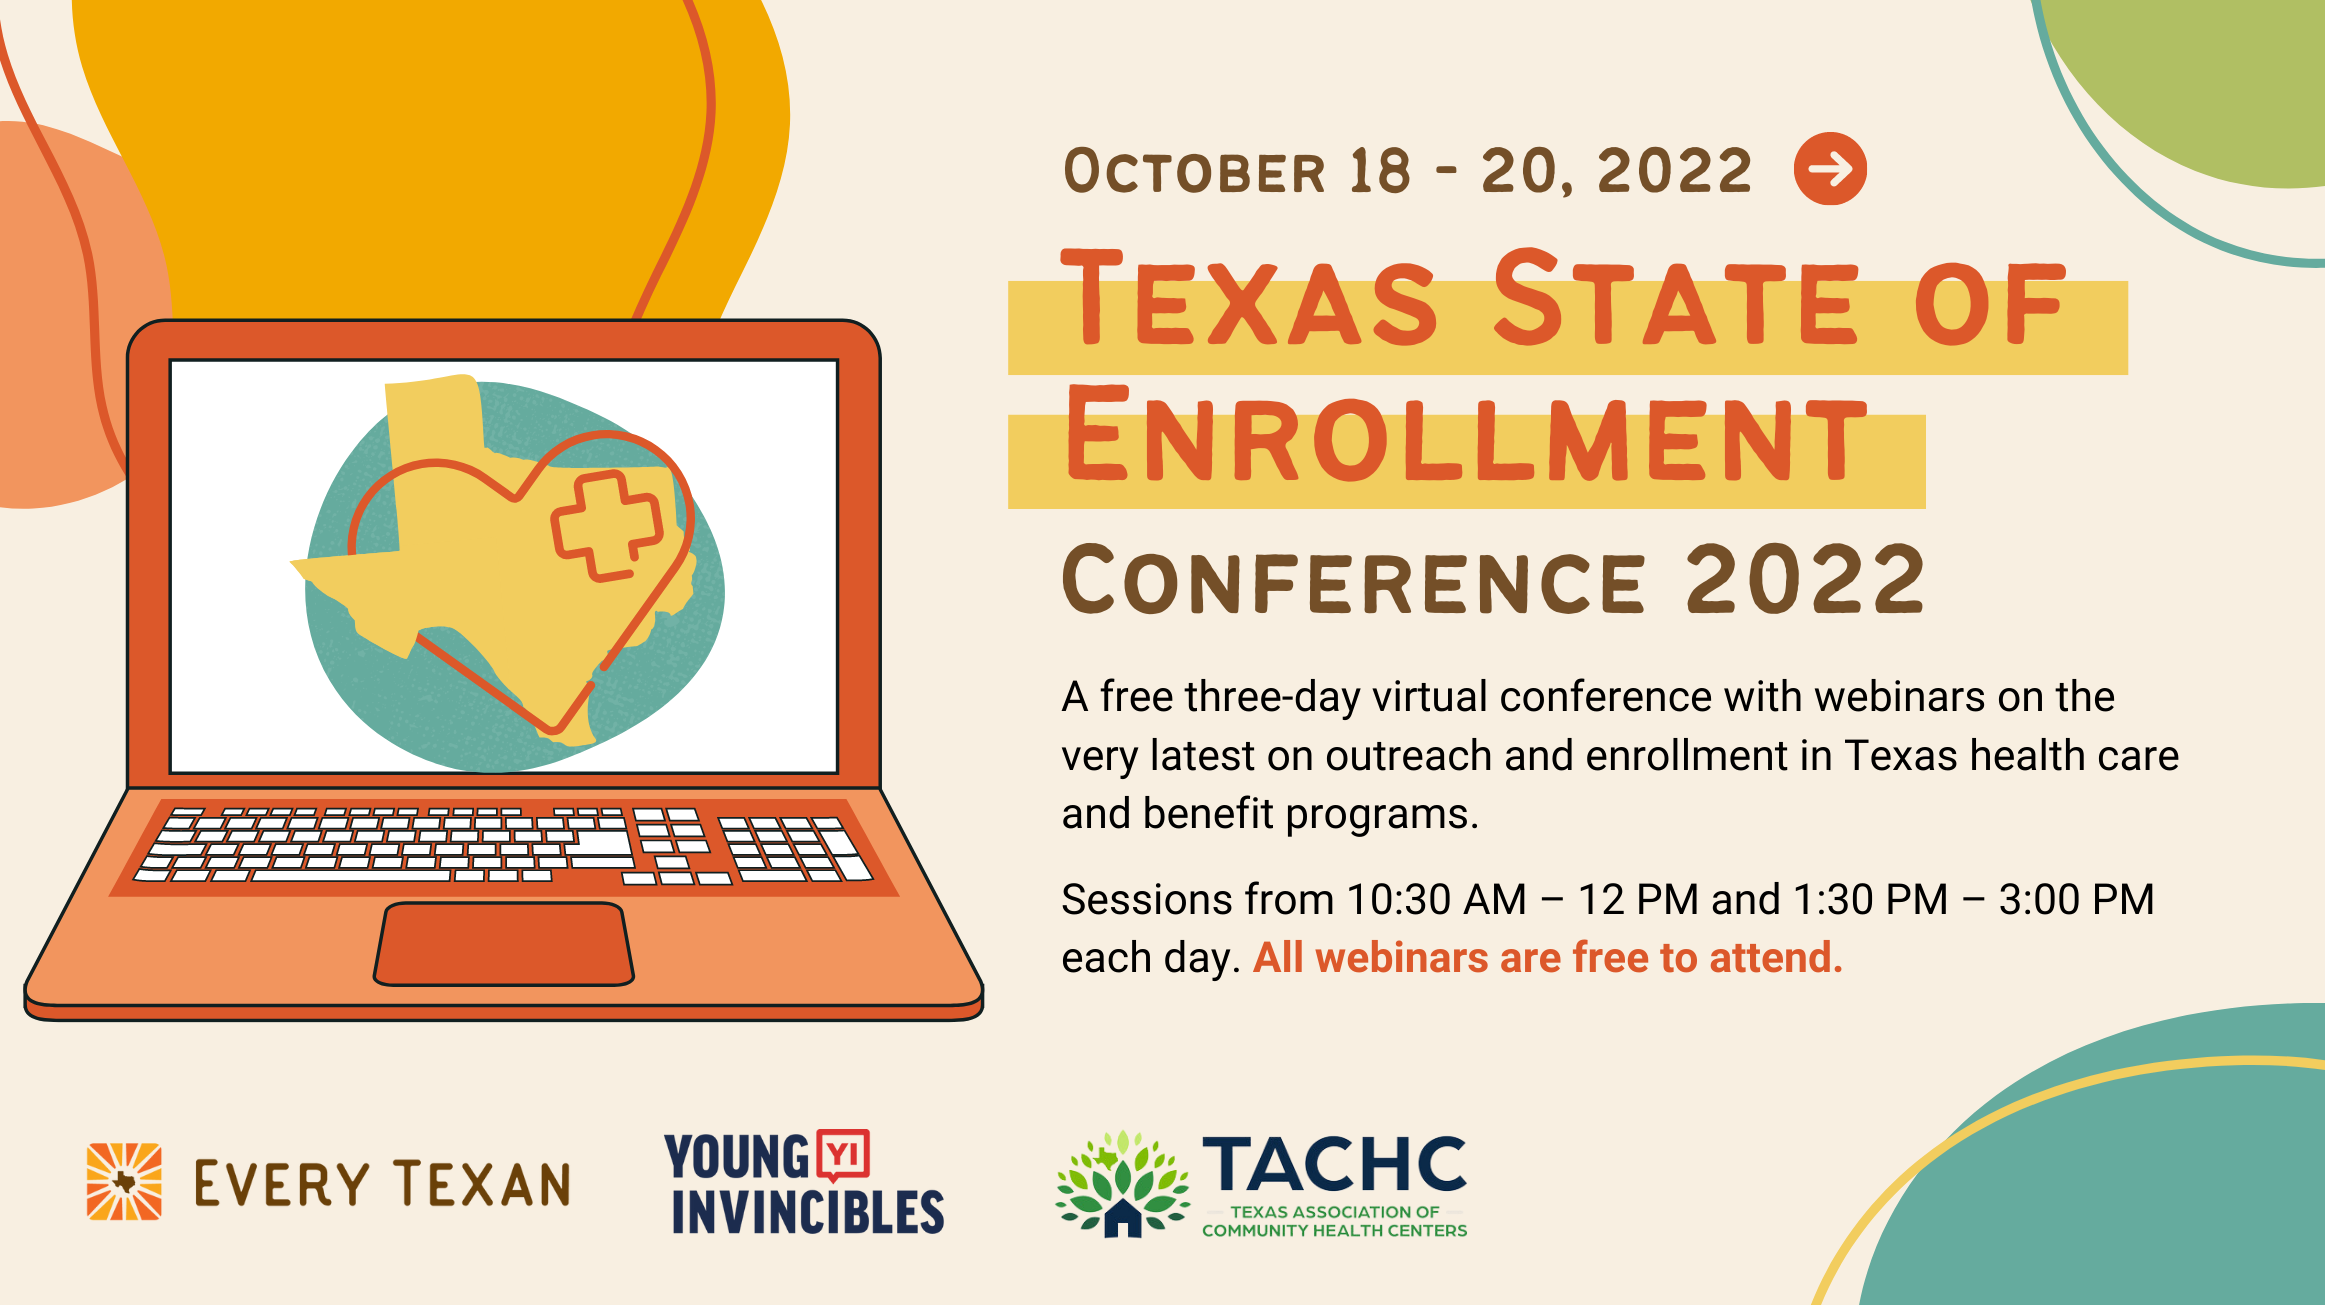 Texas State of Enrollment (TSOE) 2022 Conference